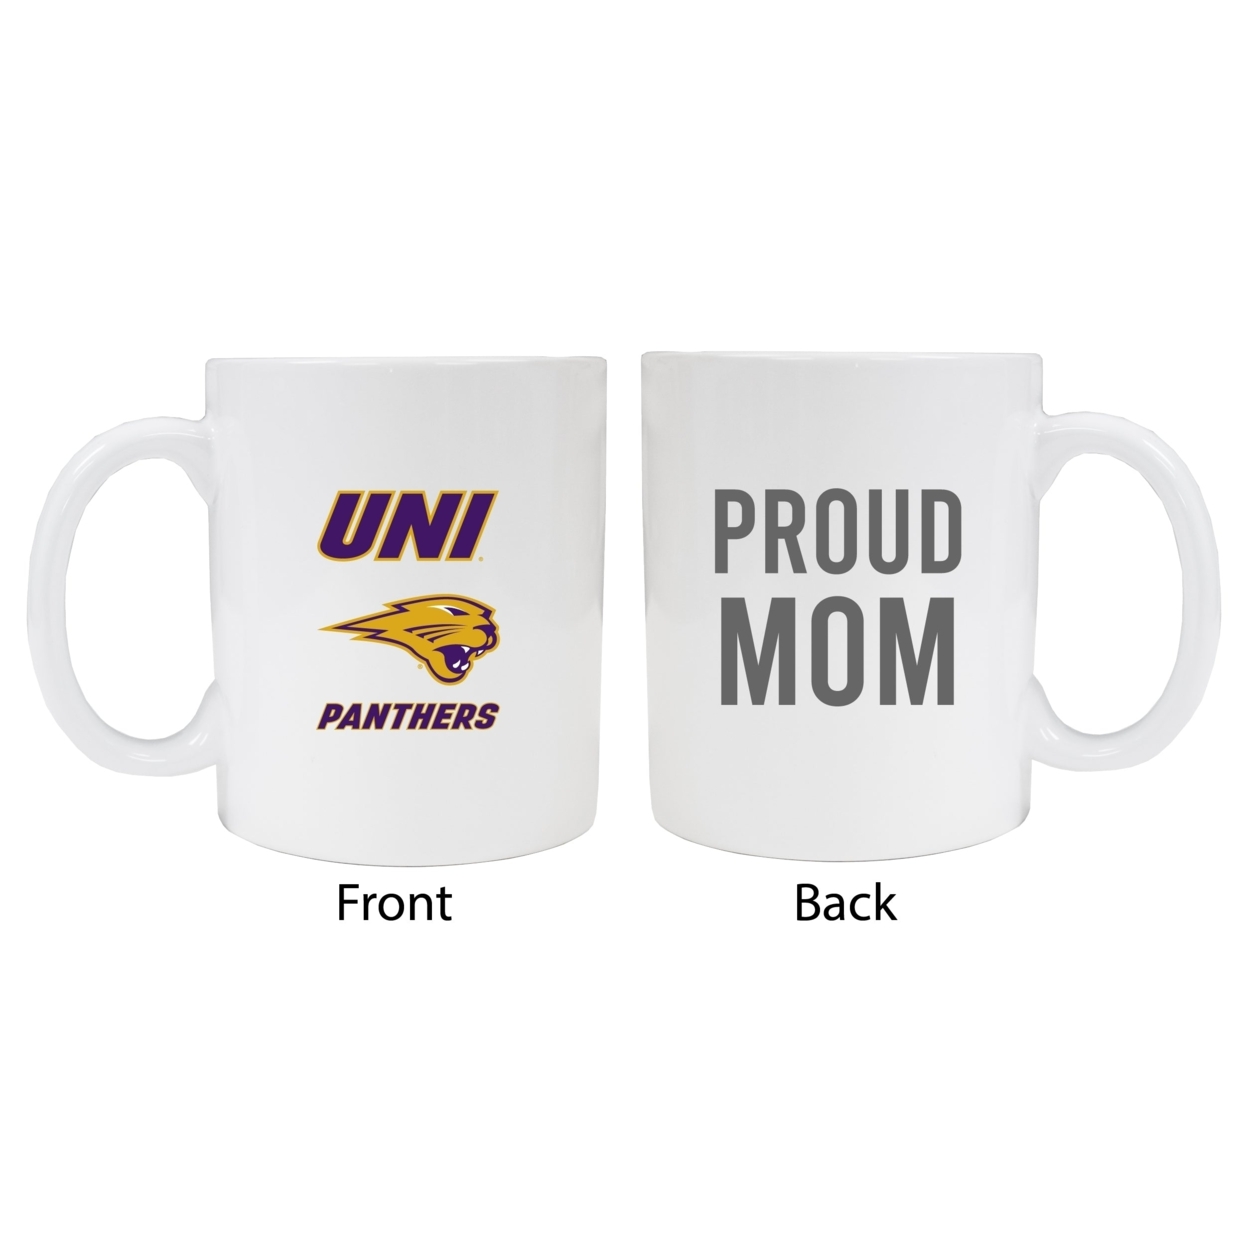 Northern Iowa Panthers Proud Mom Ceramic Coffee Mug - White (2 Pack)